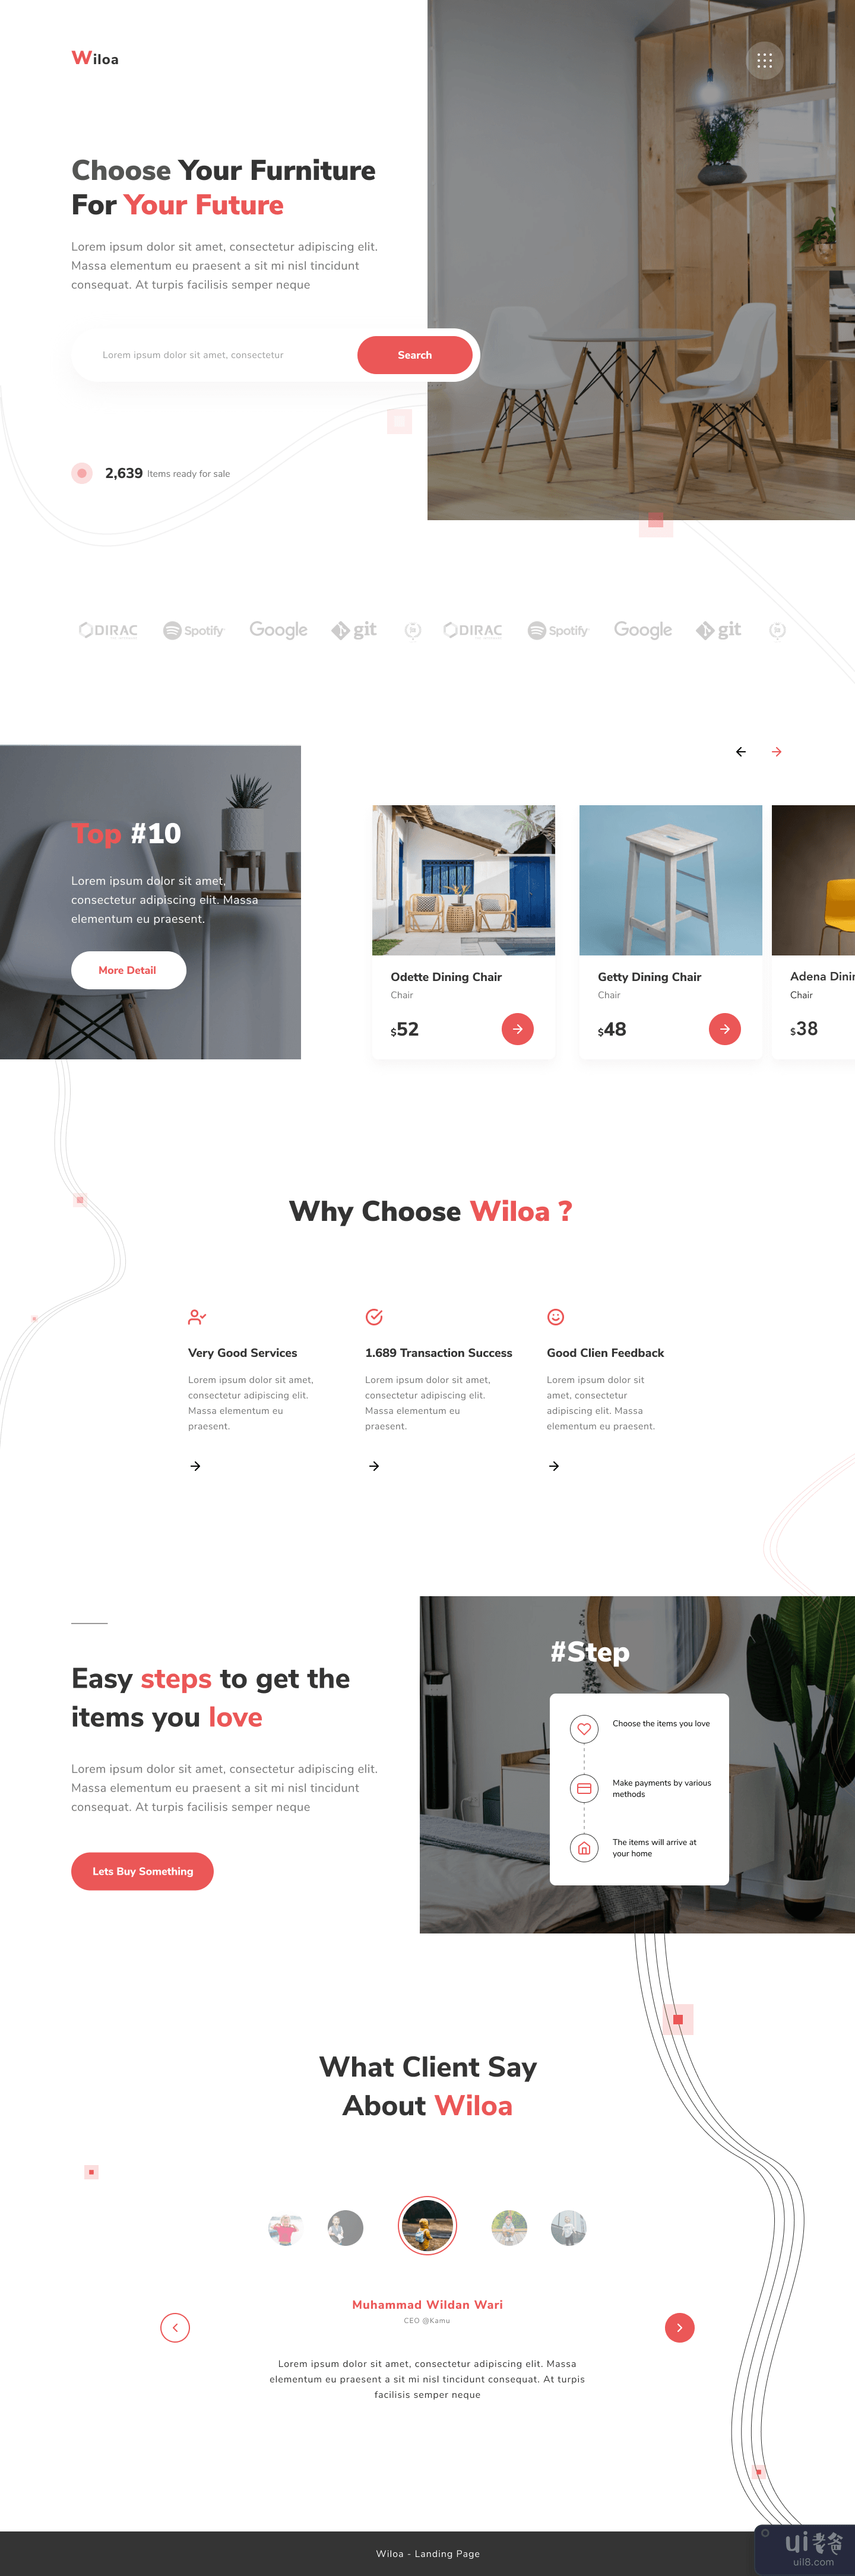 家具店 - 登陆页面(Furniture Store - Landing Page)插图